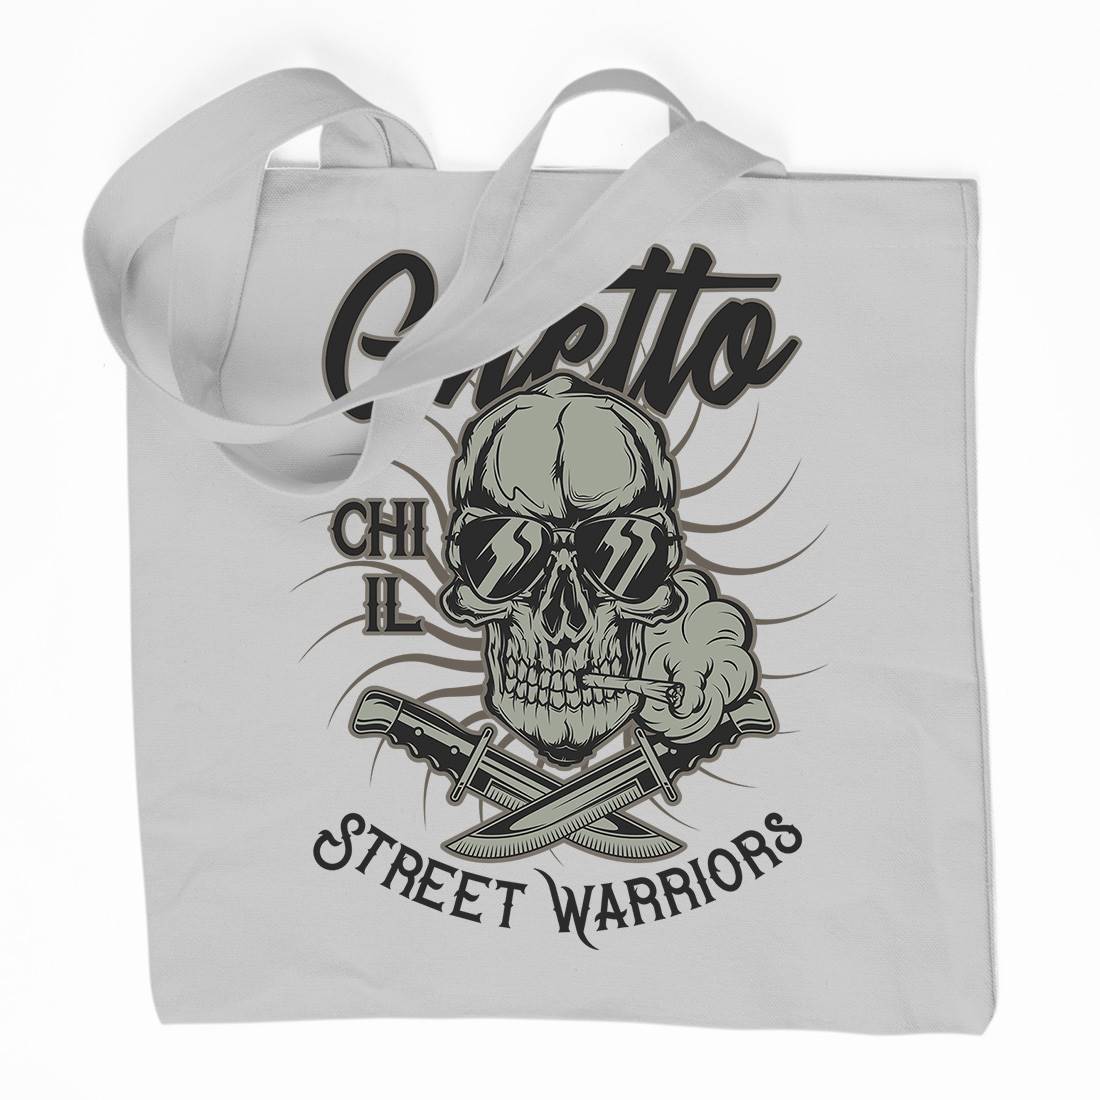 Ghetto Street Warriors Organic Premium Cotton Tote Bag Retro D937